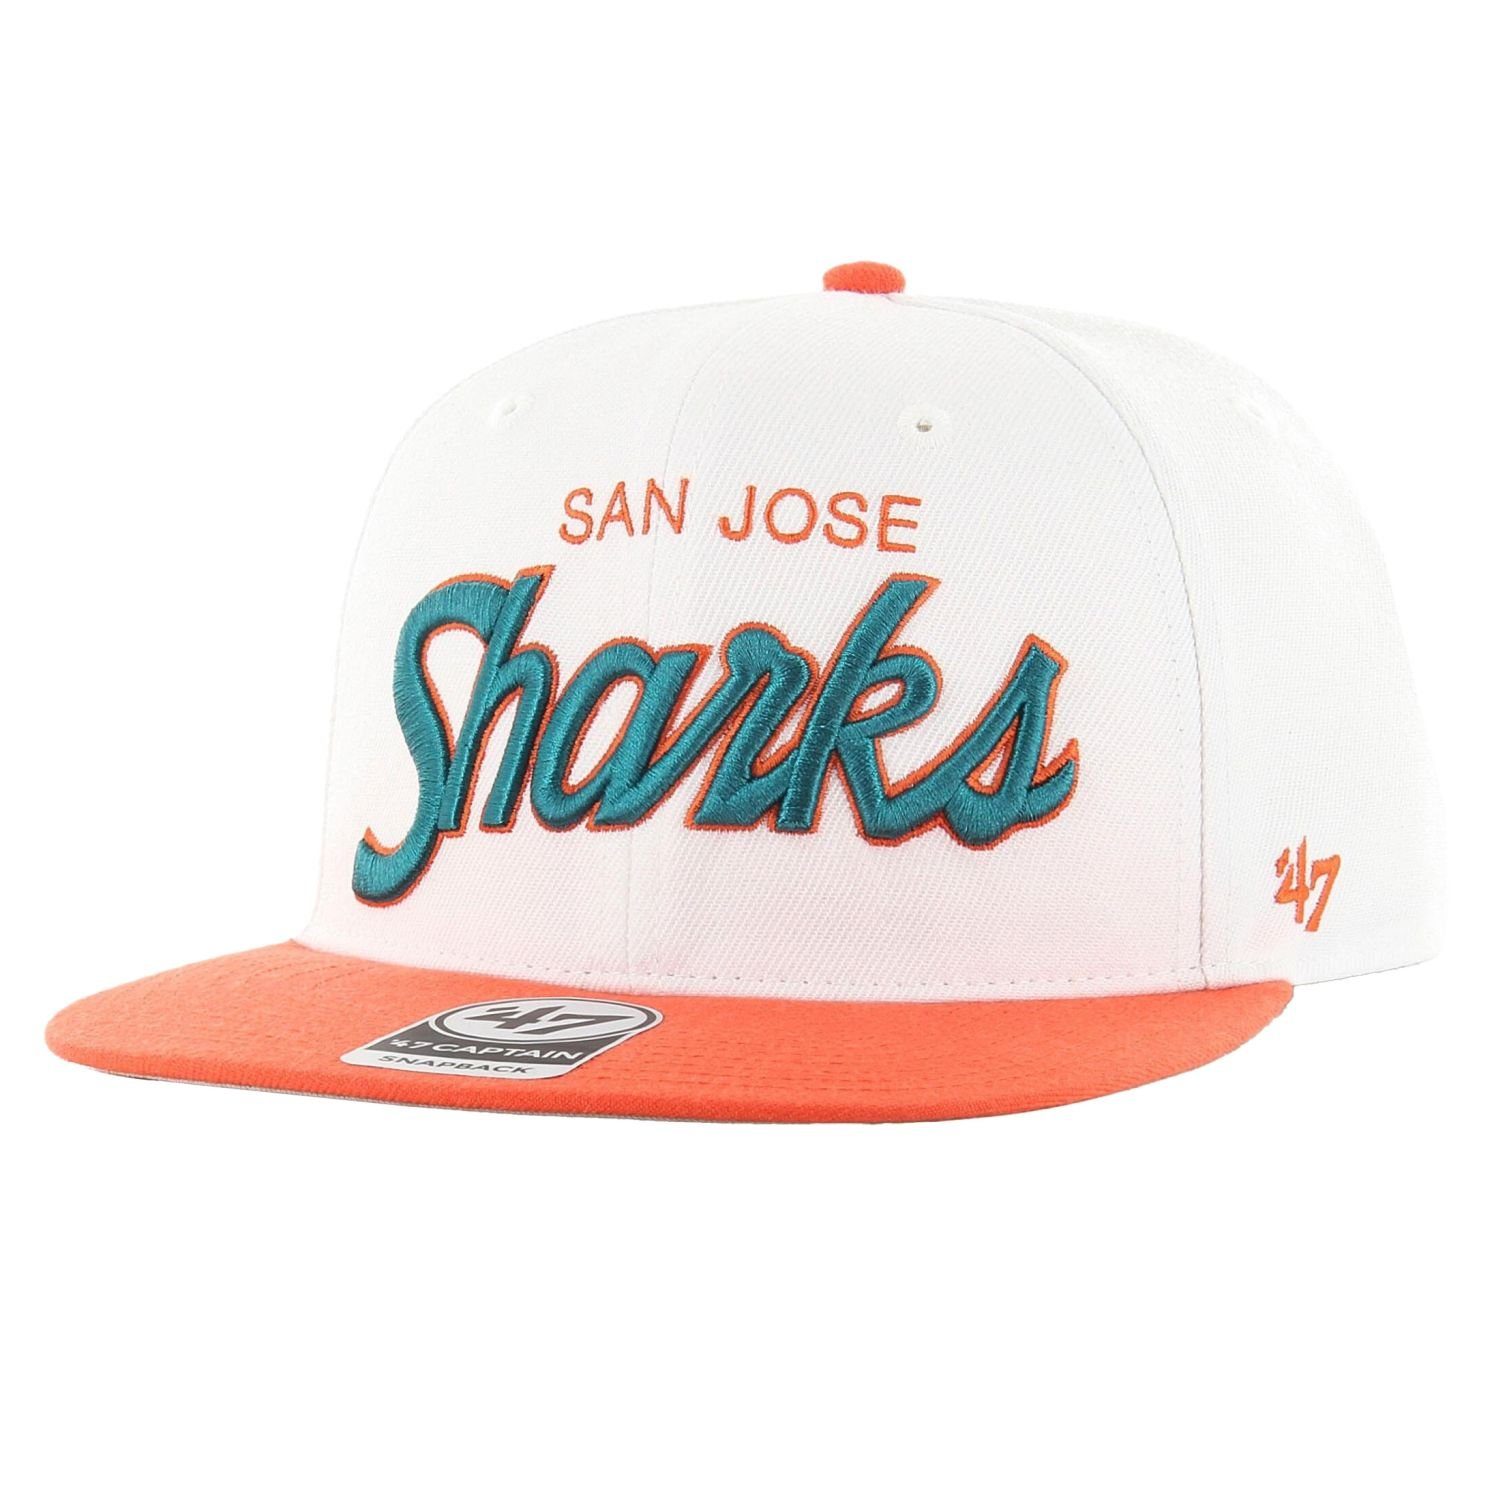 Captain Cap SHOT Brand '47 Jose Sharks Snapback SURE San